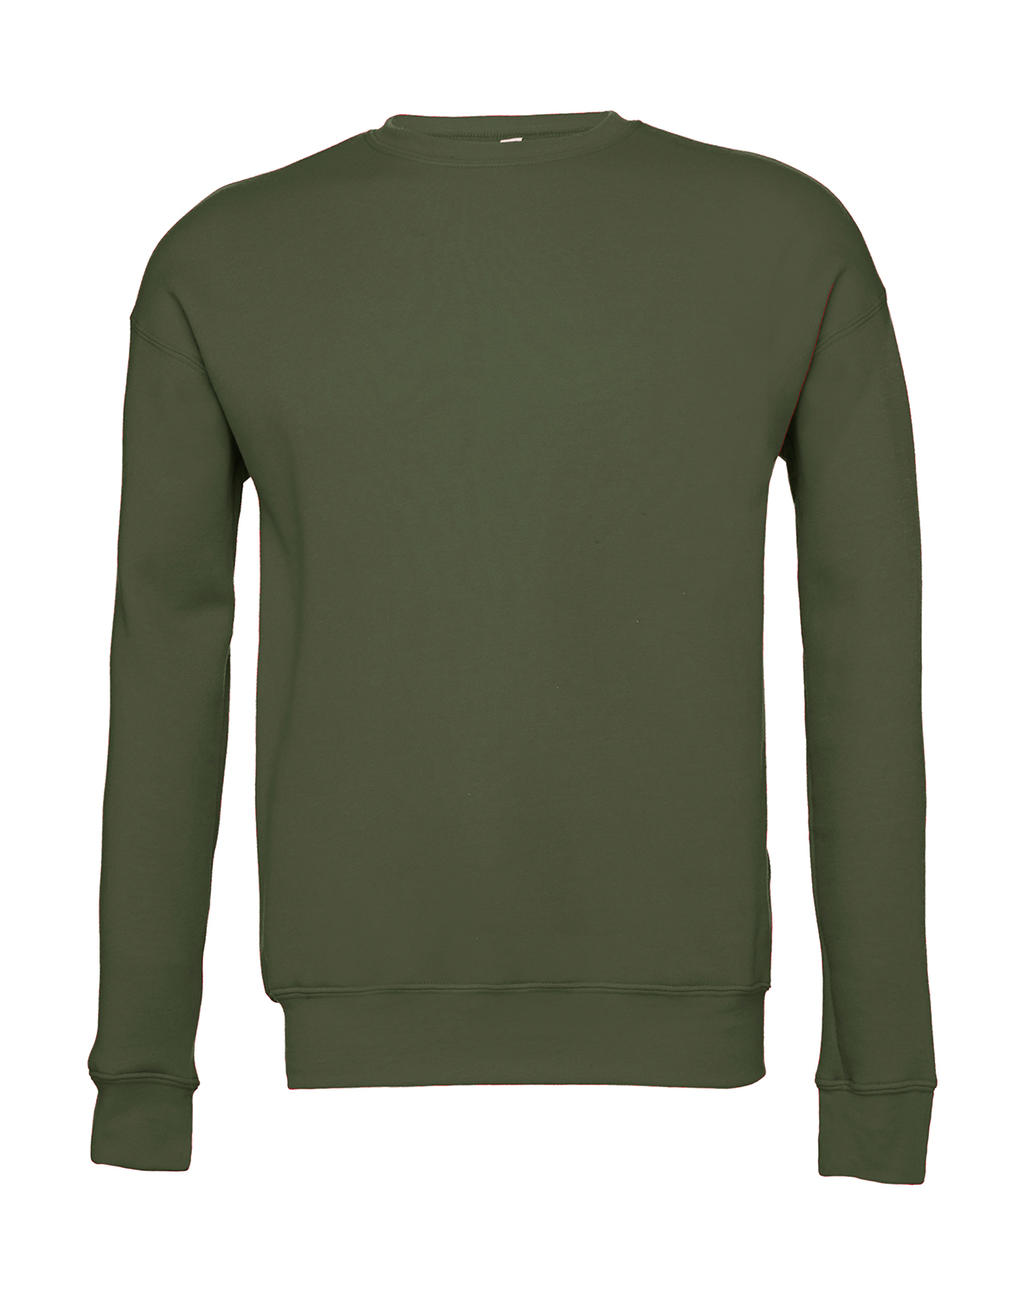  Unisex Drop Shoulder Fleece in Farbe Military Green